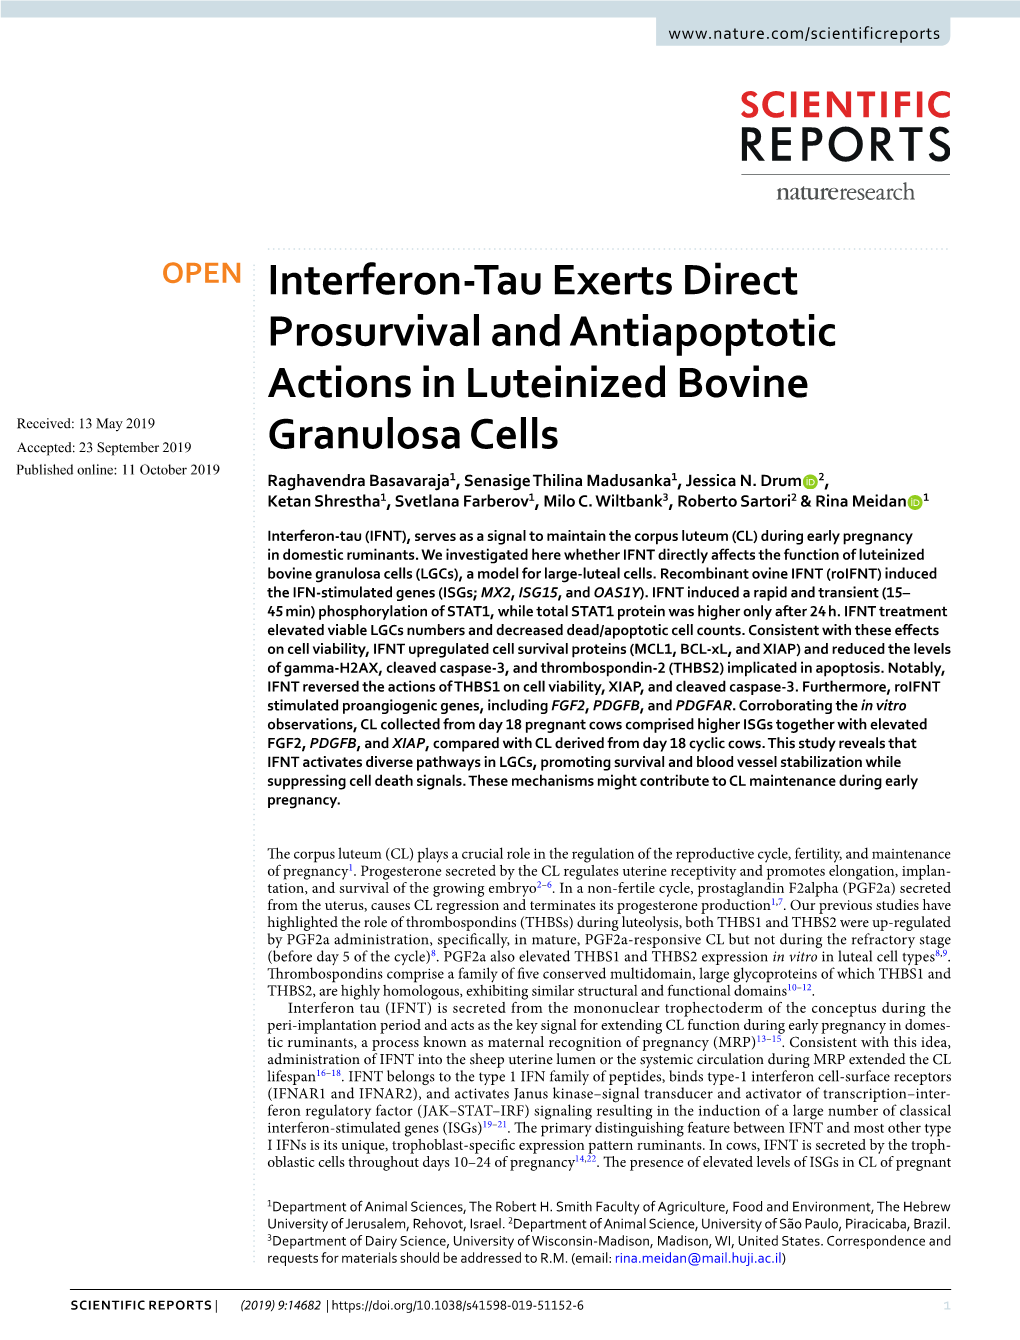 Interferon-Tau Exerts Direct Prosurvival and Antiapoptotic